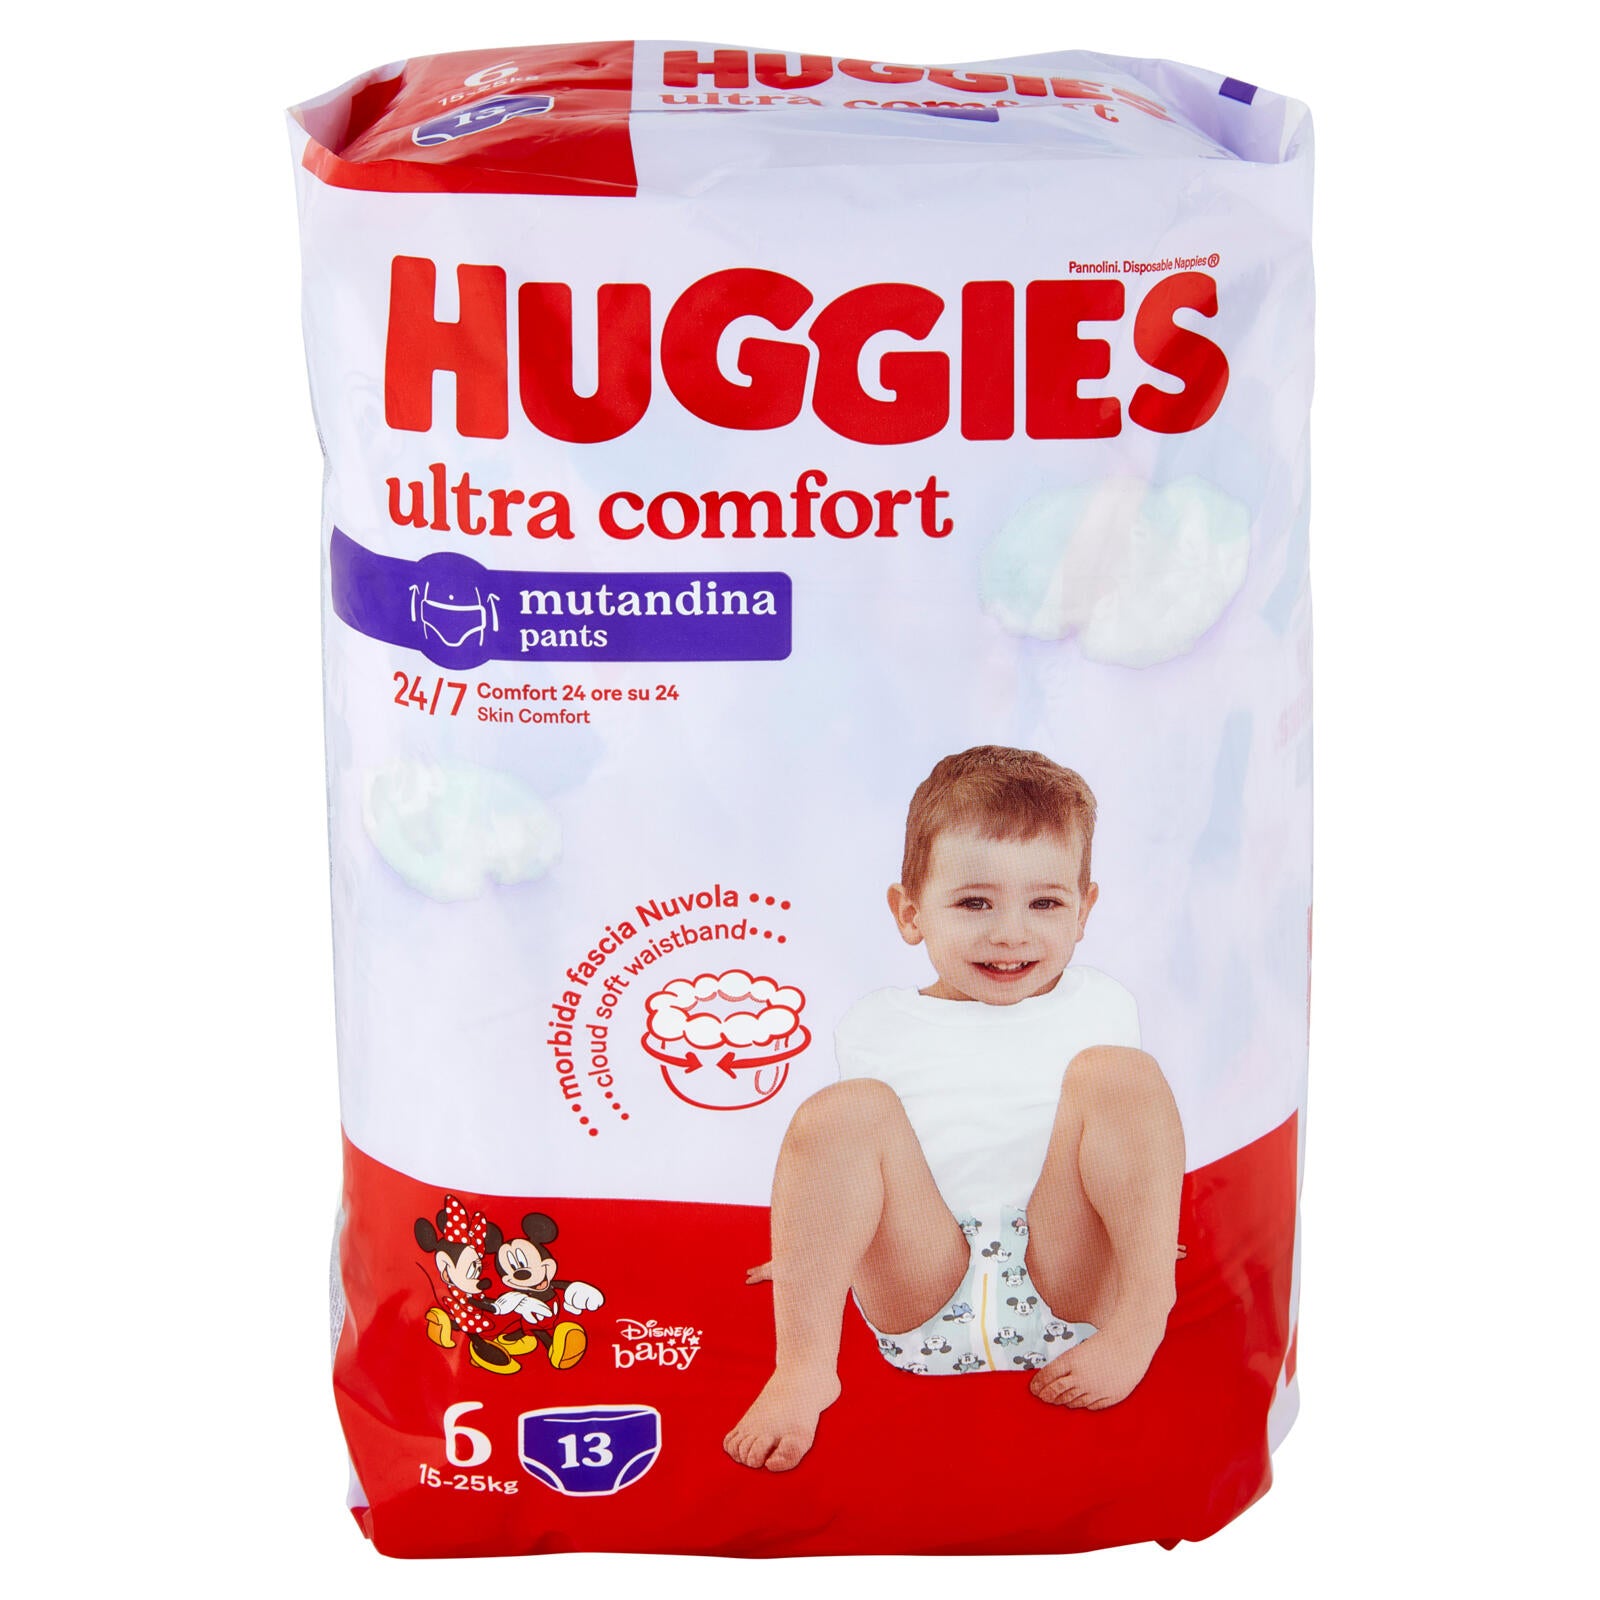 Huggies ultra comfort mutandina 6 15-25 Kg 13 pz